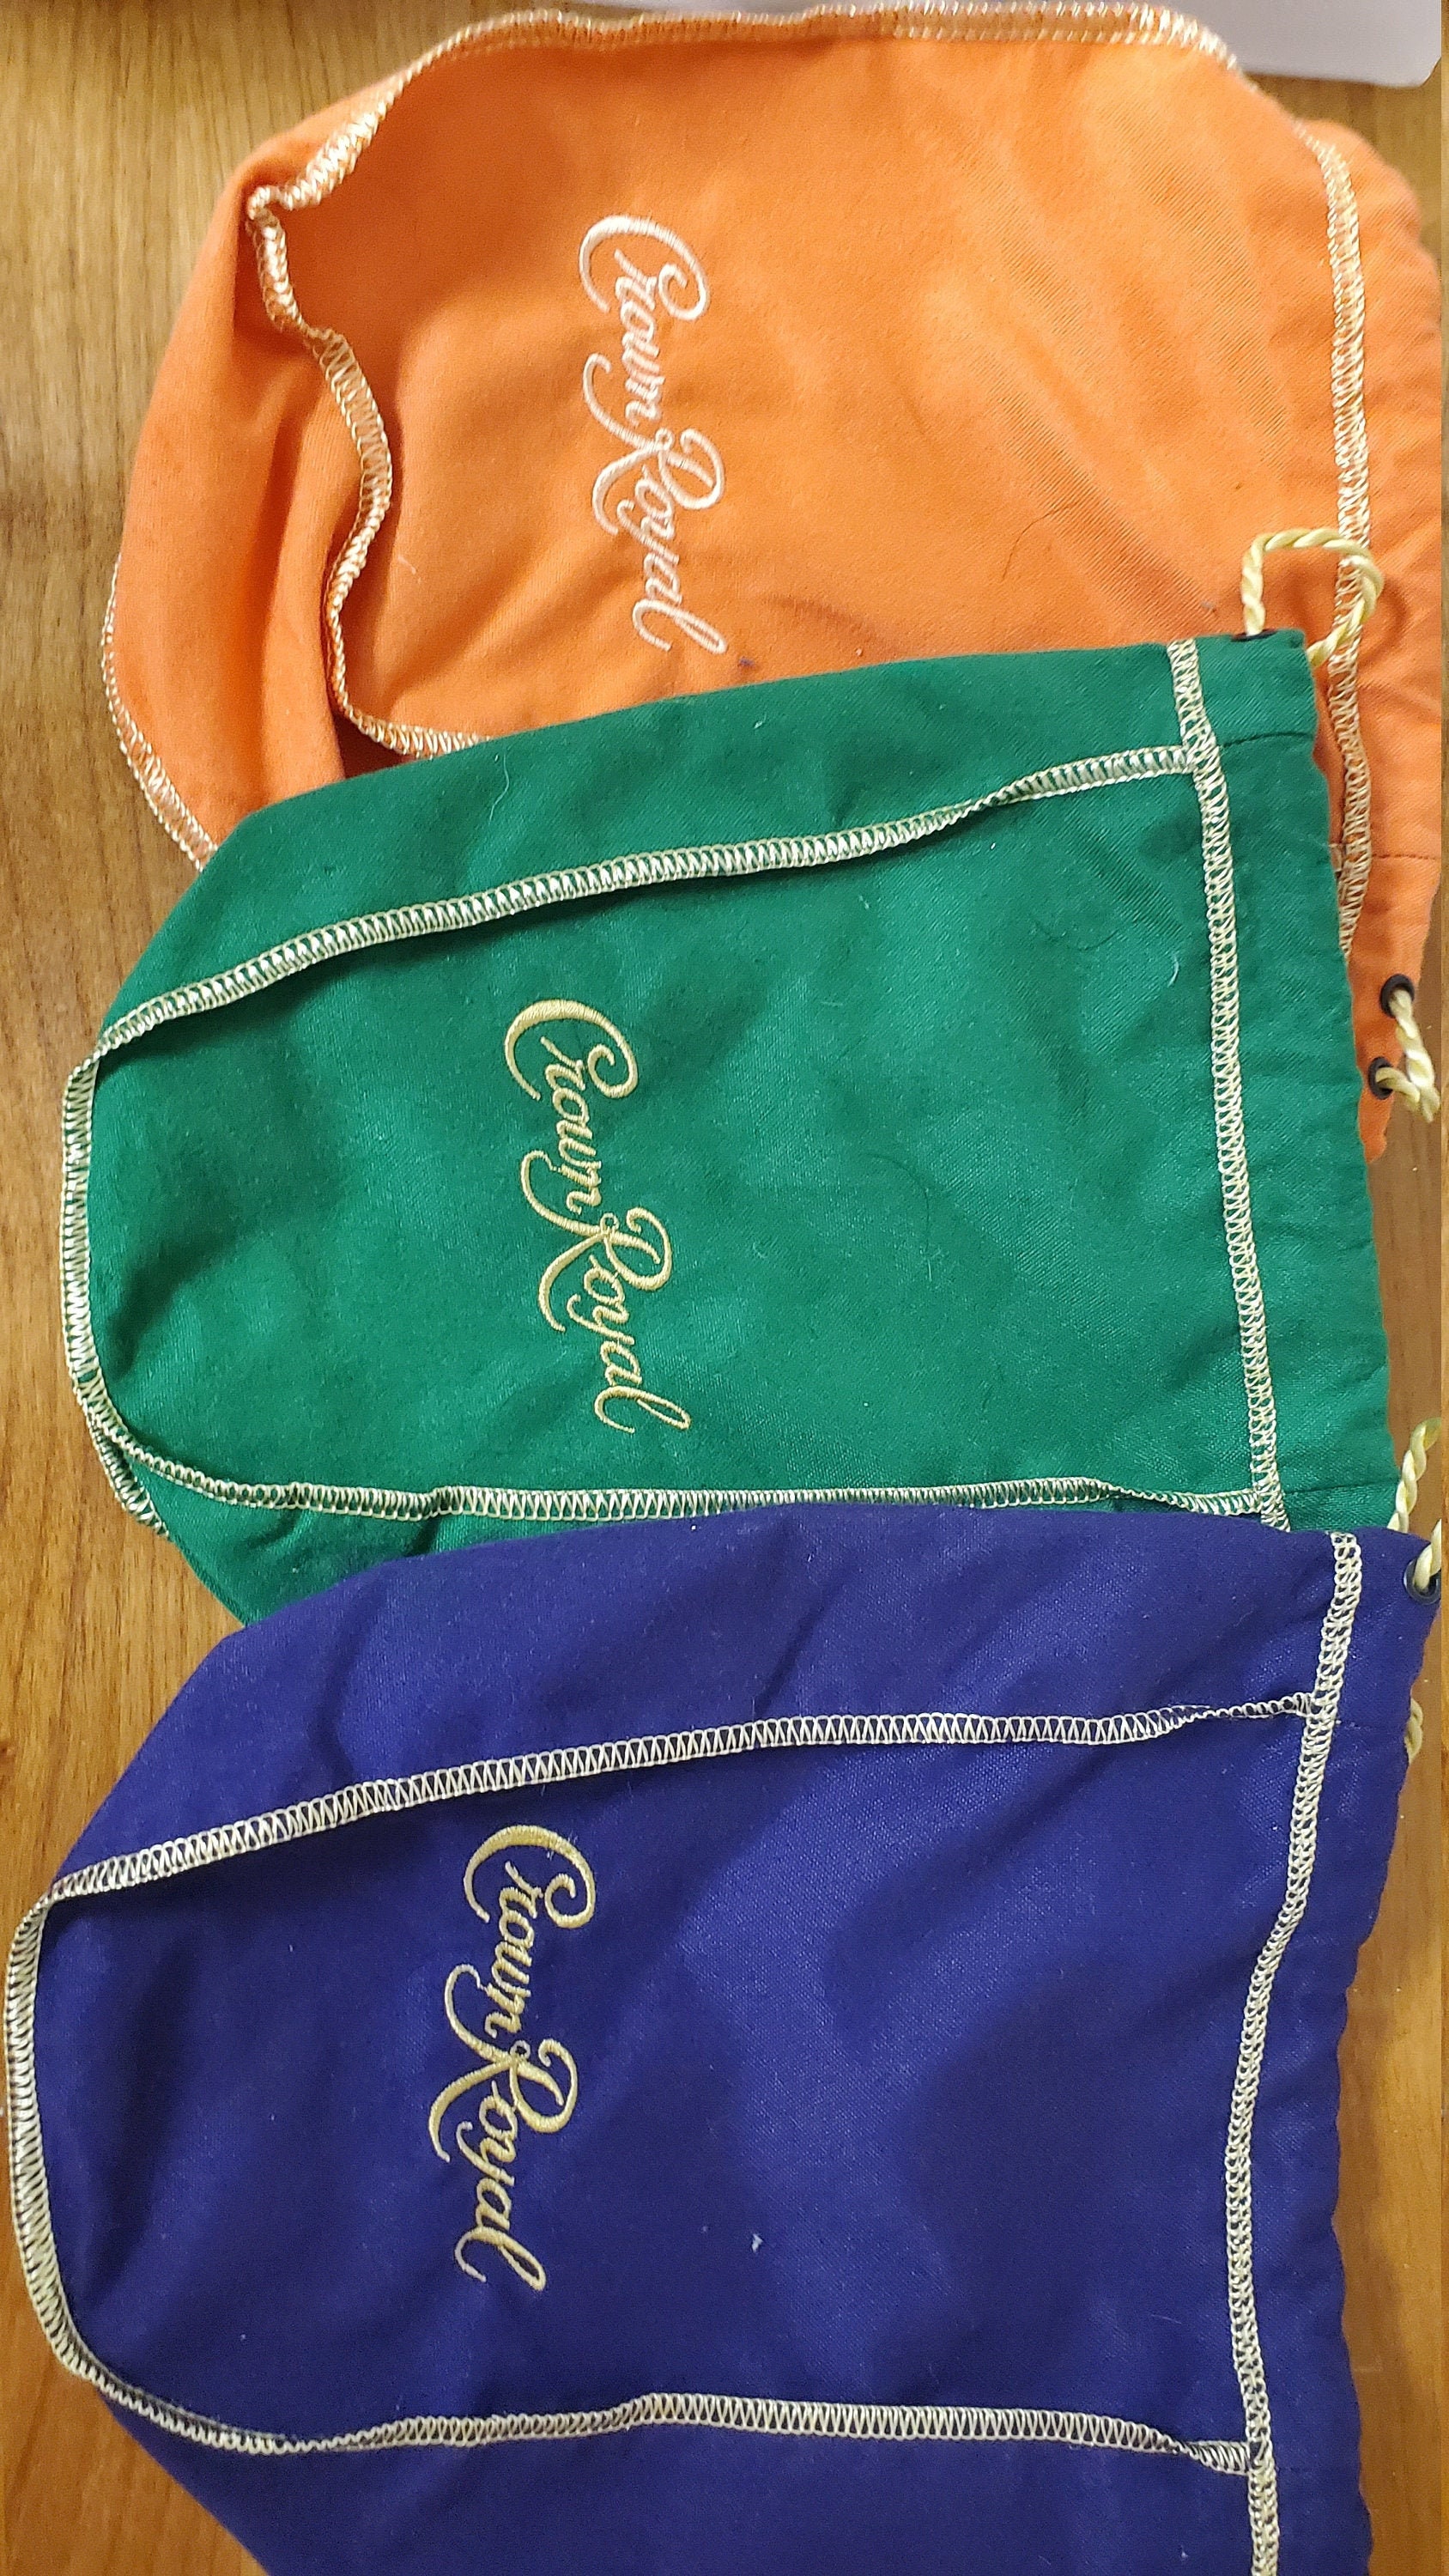 Custom Bags – Crown Royal USA E-Comm